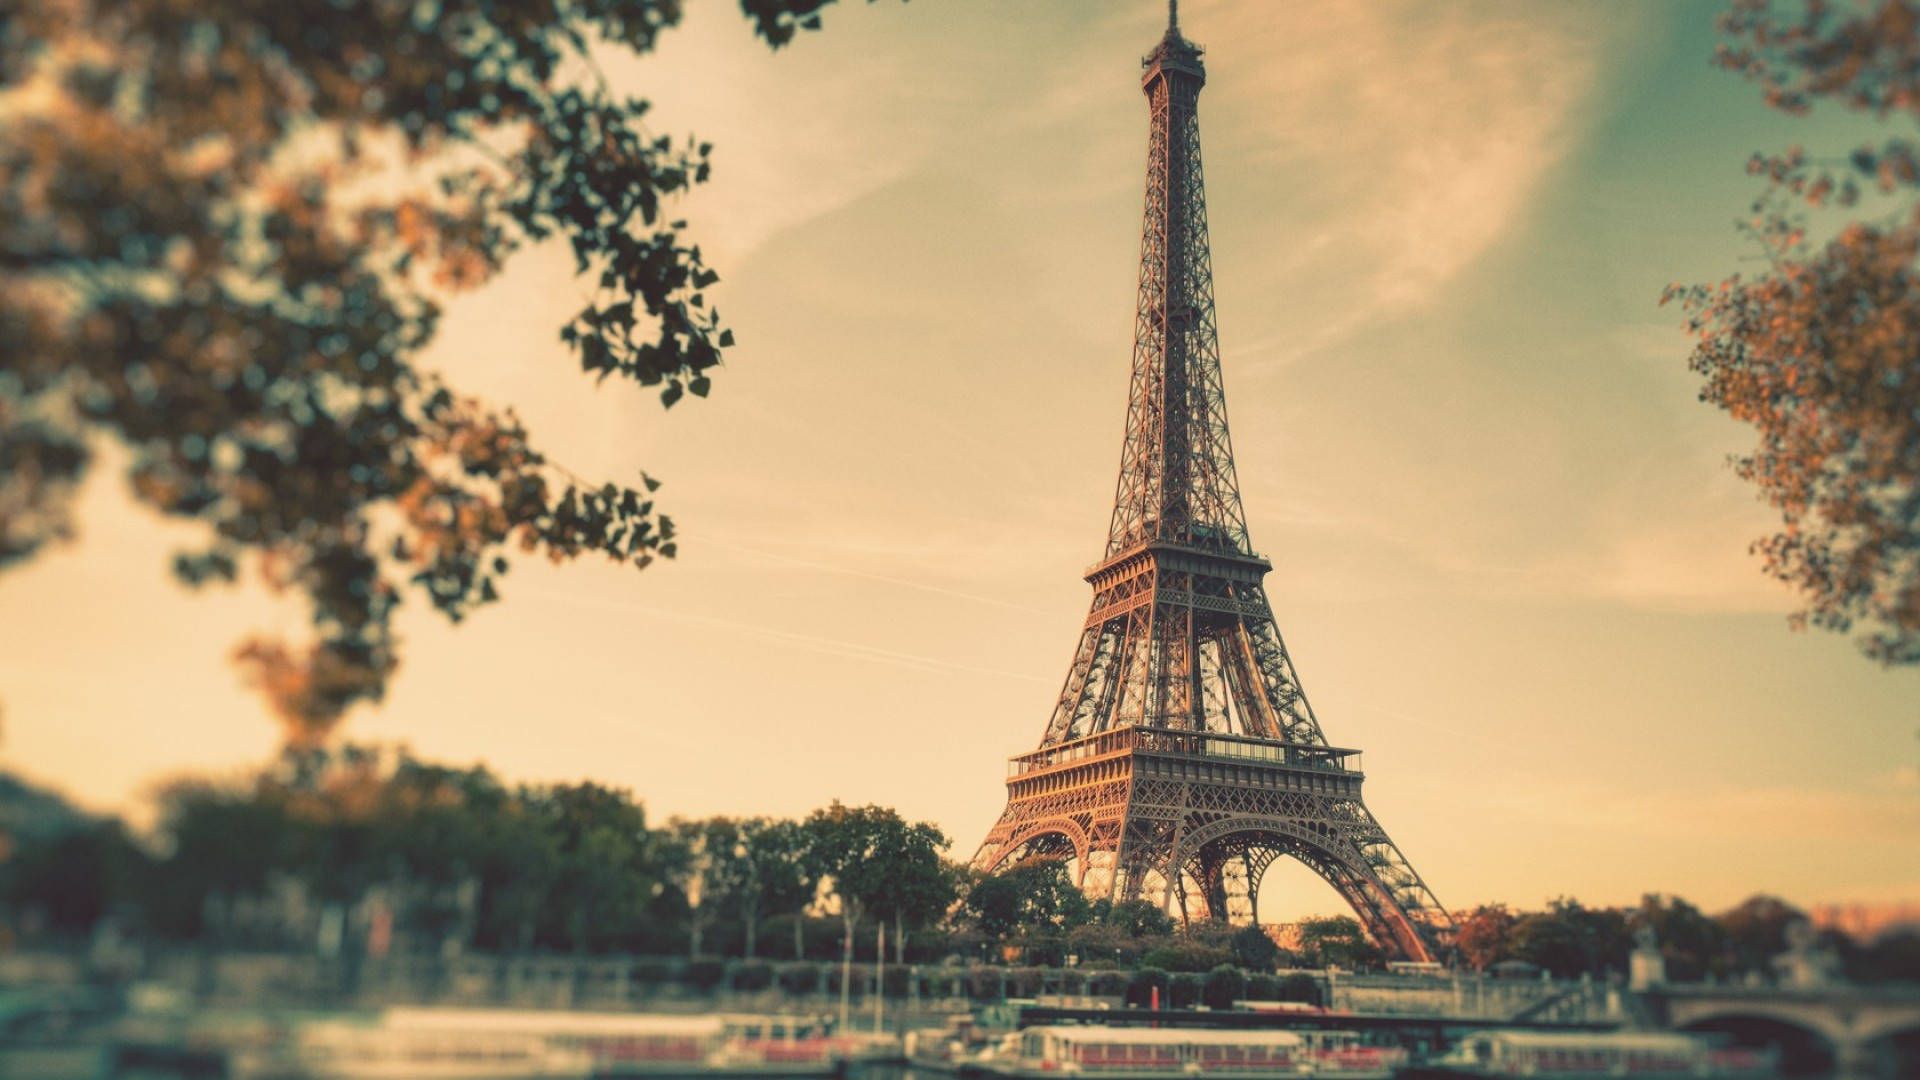 The eiffel tower is seen in a photo - Paris, Eiffel Tower